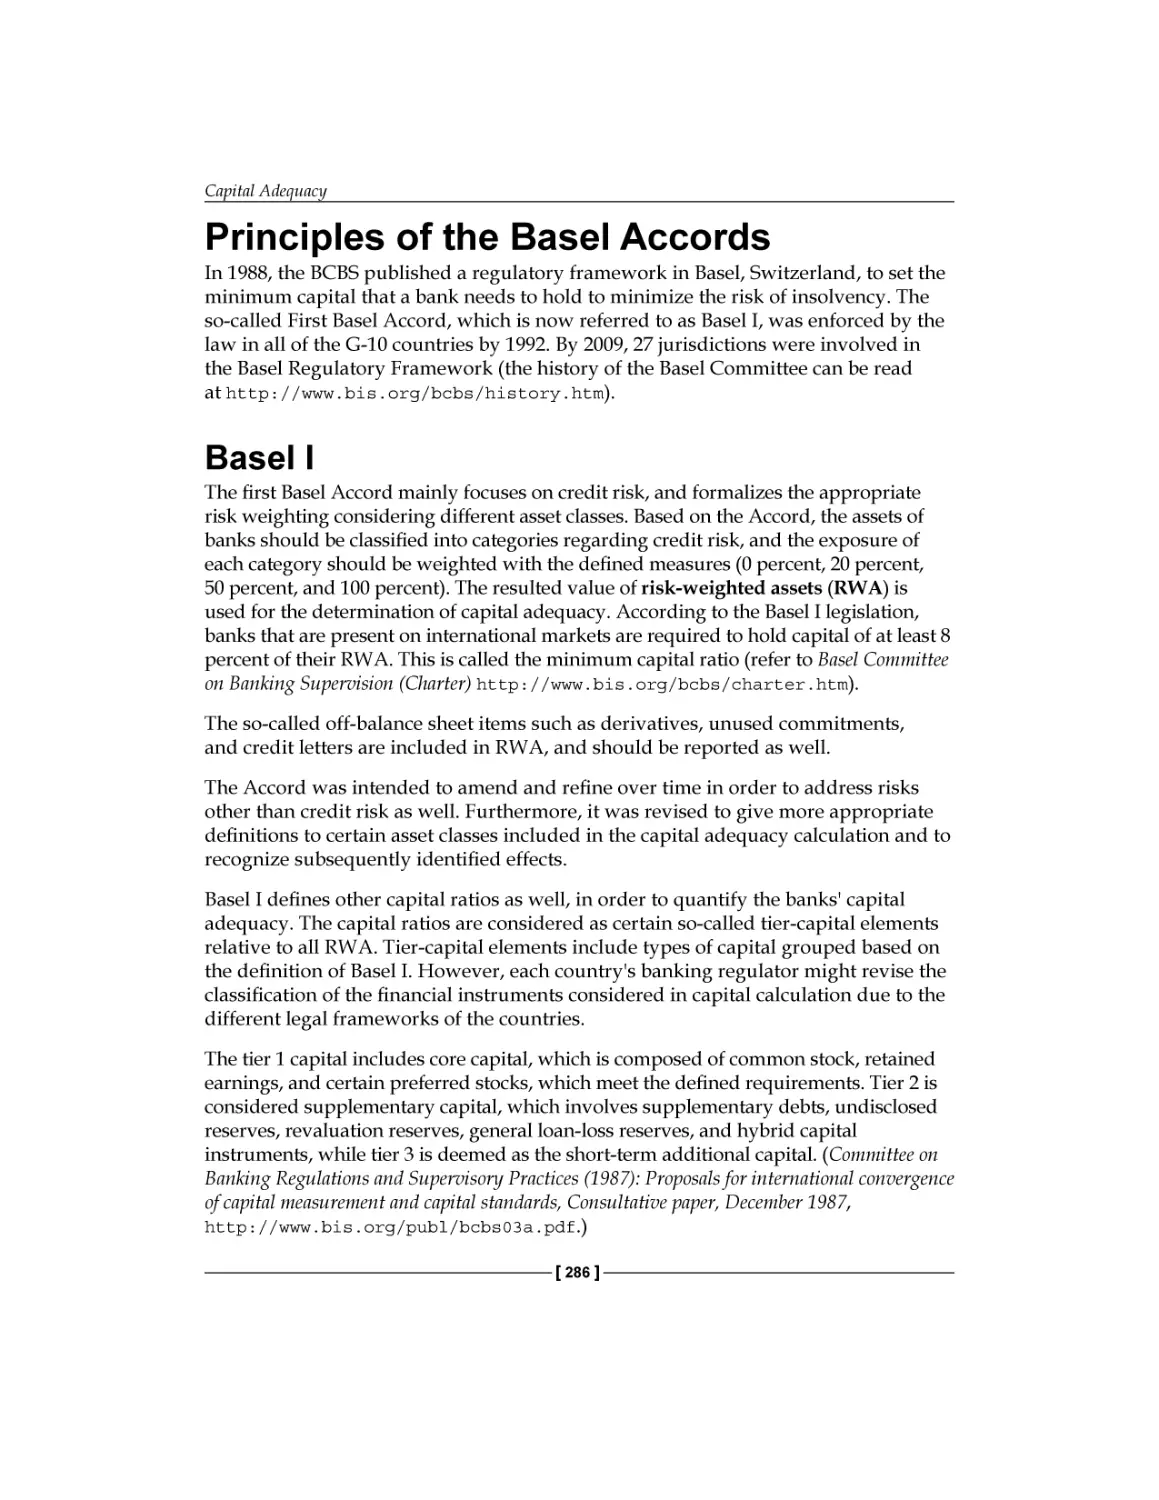 Principles of the Basel Accords
Basel I